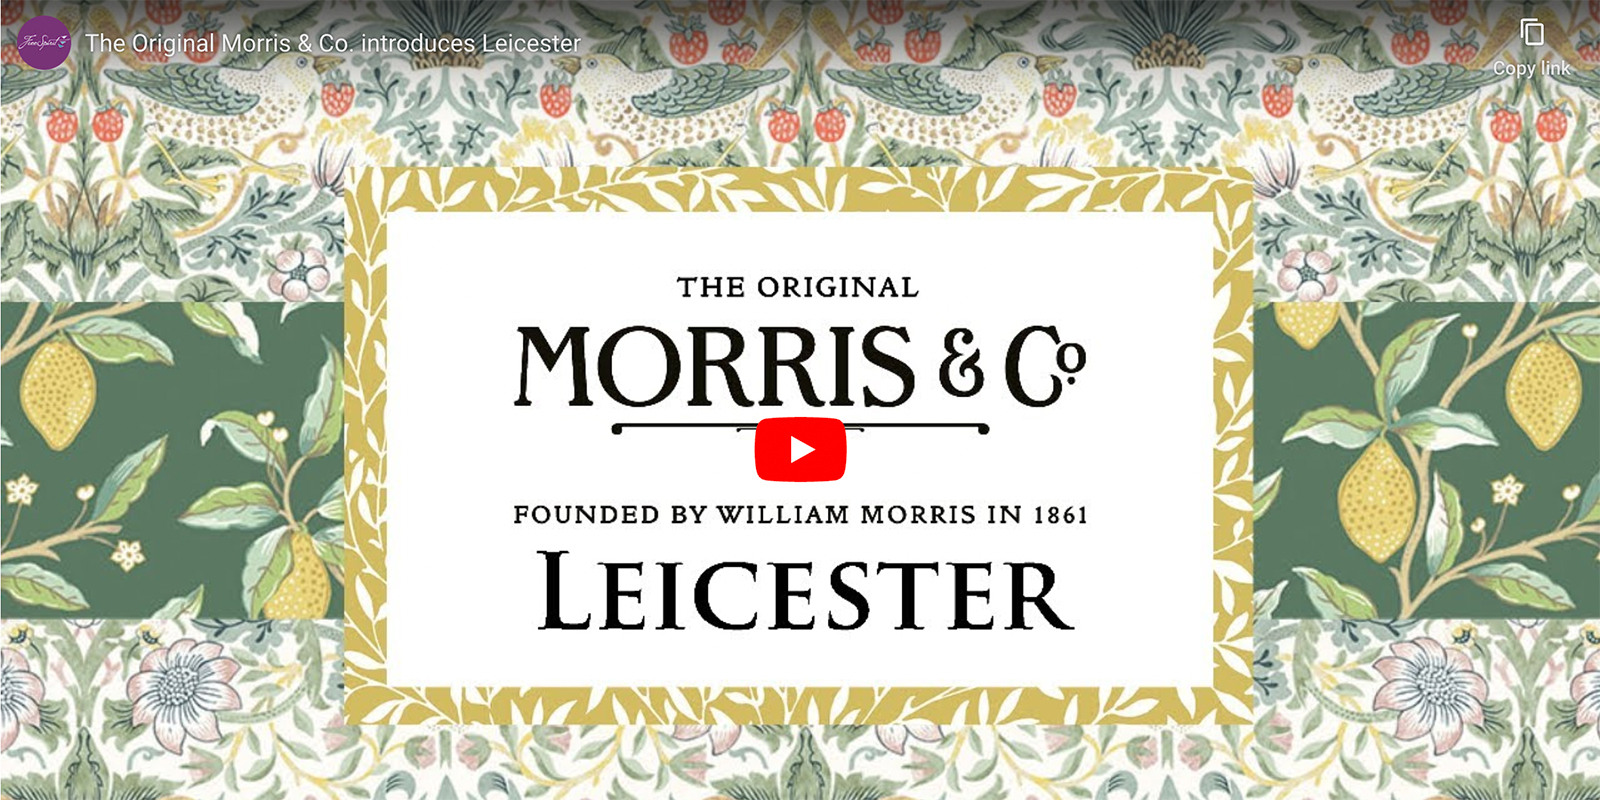 The Original Morris & Co. introduces Leicester